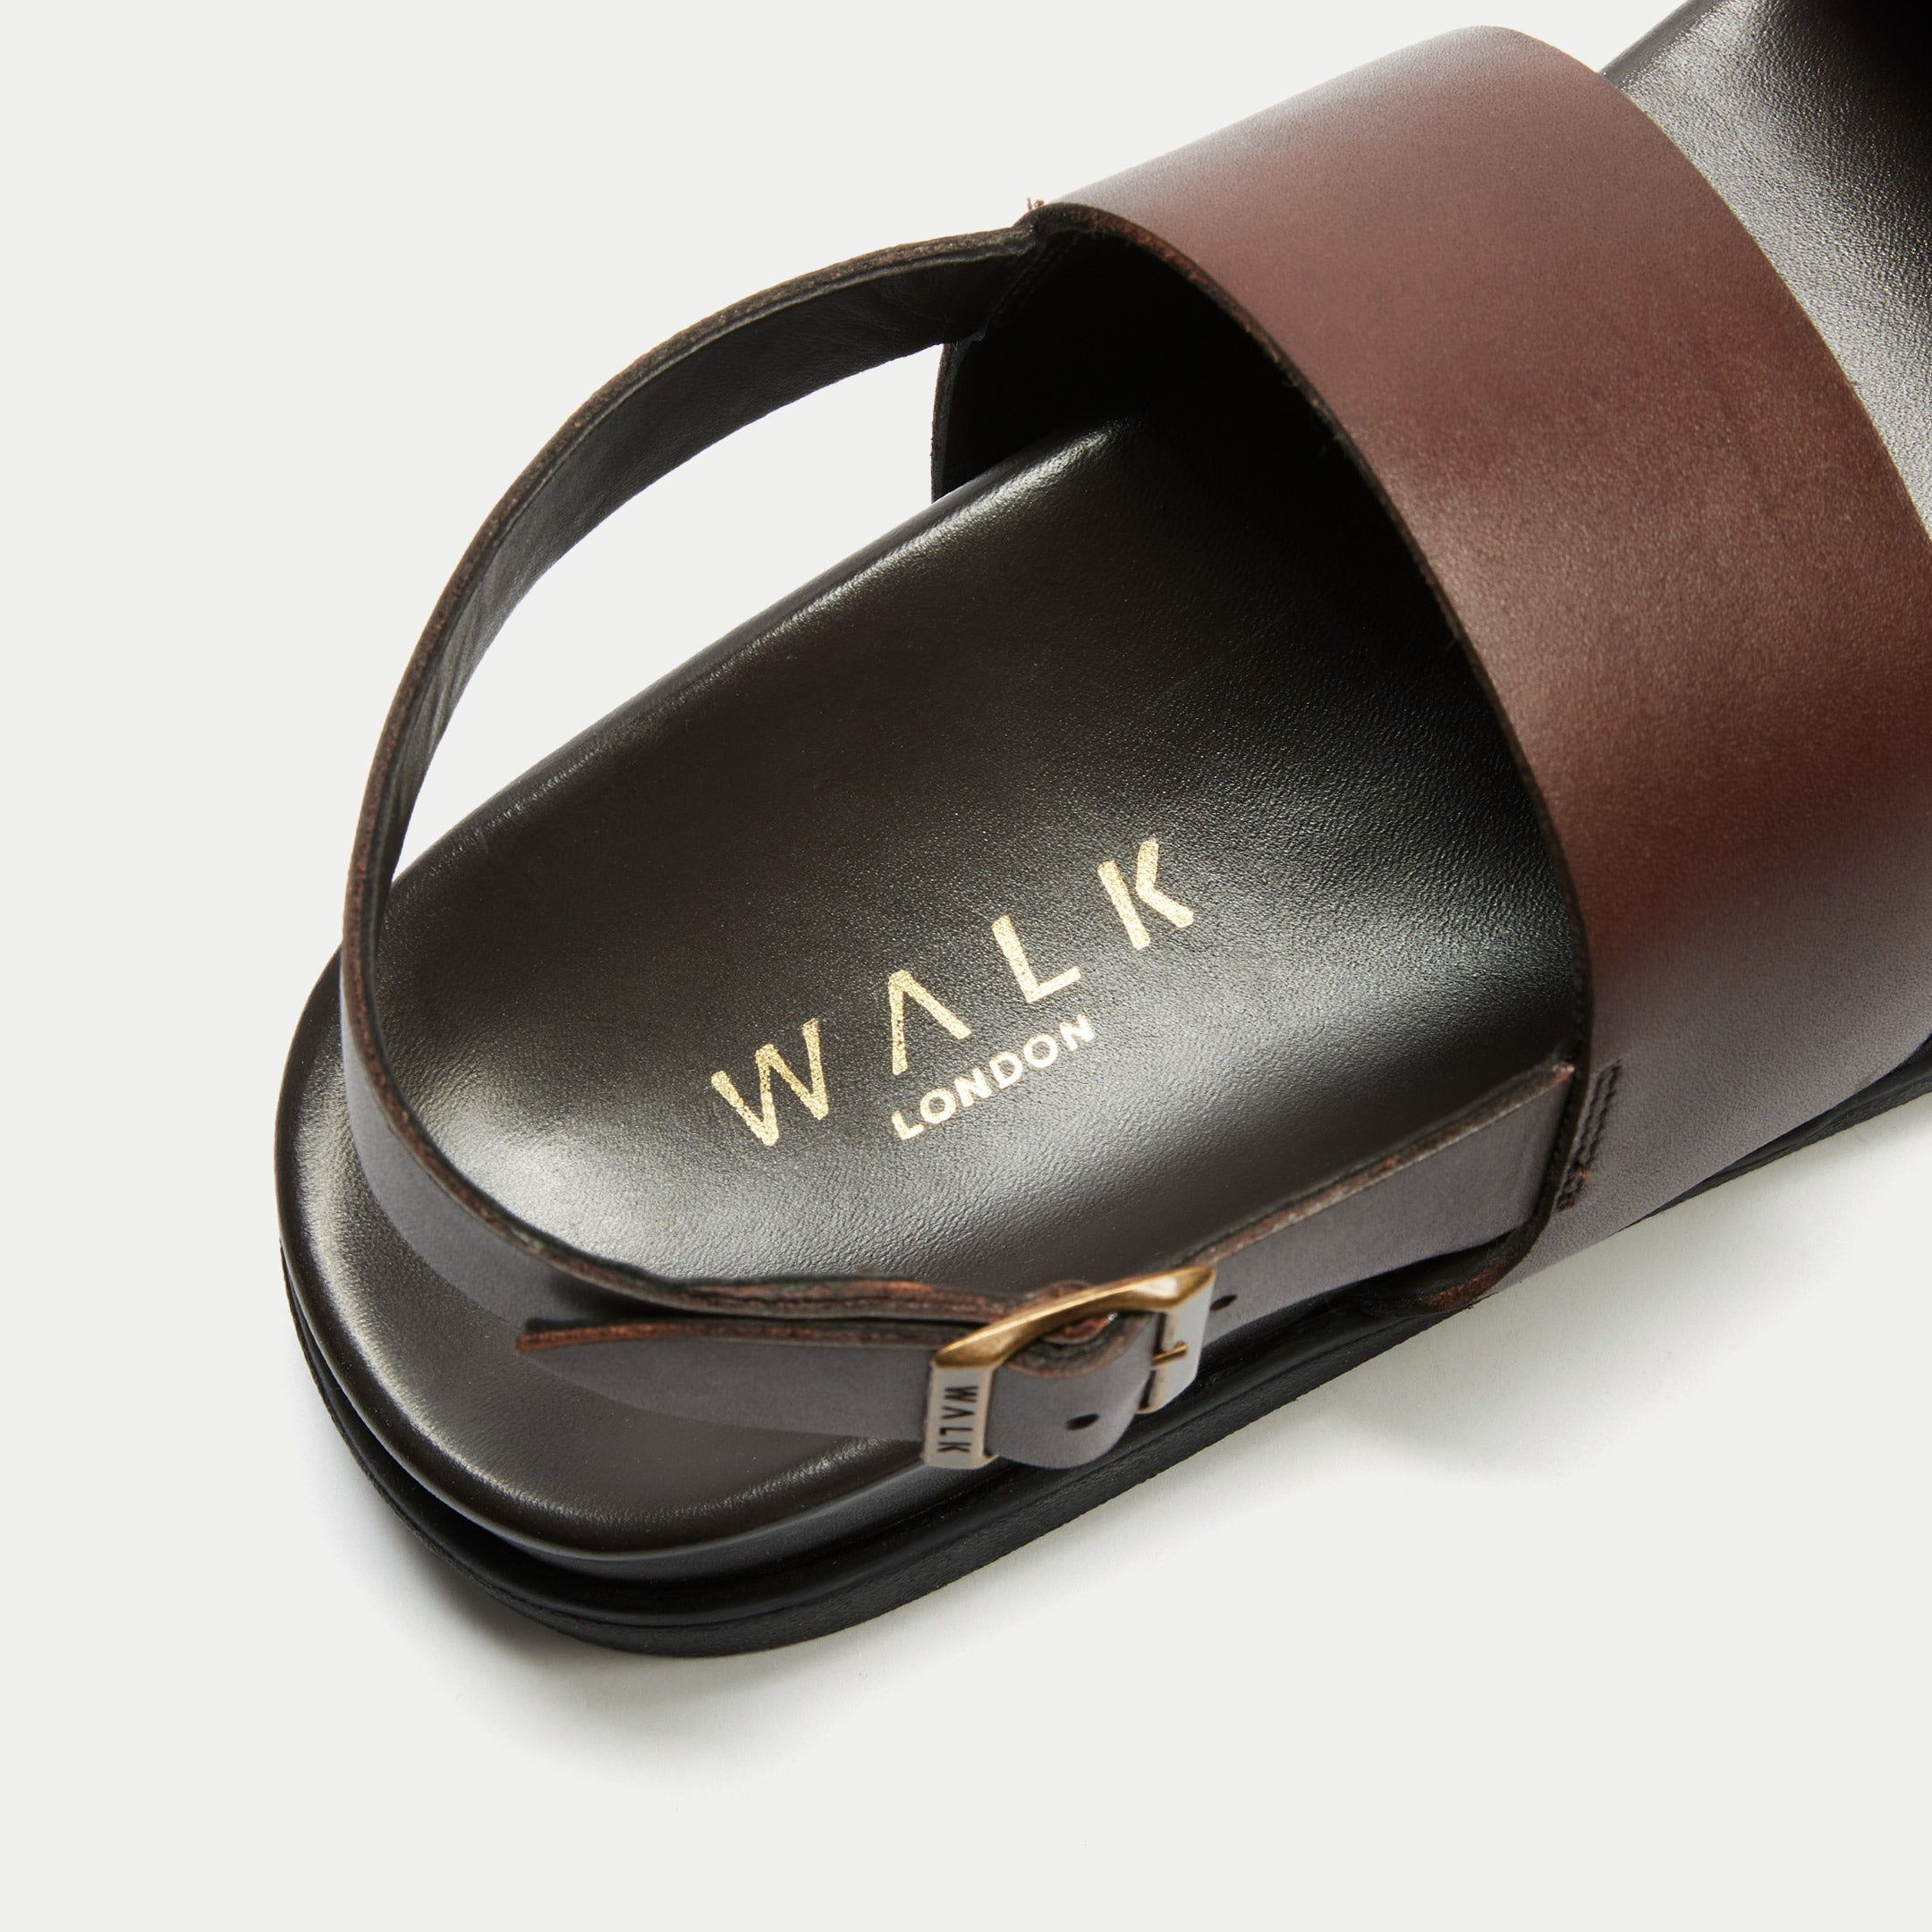 Walk London Mens Jackson Sandal in Brown Leather